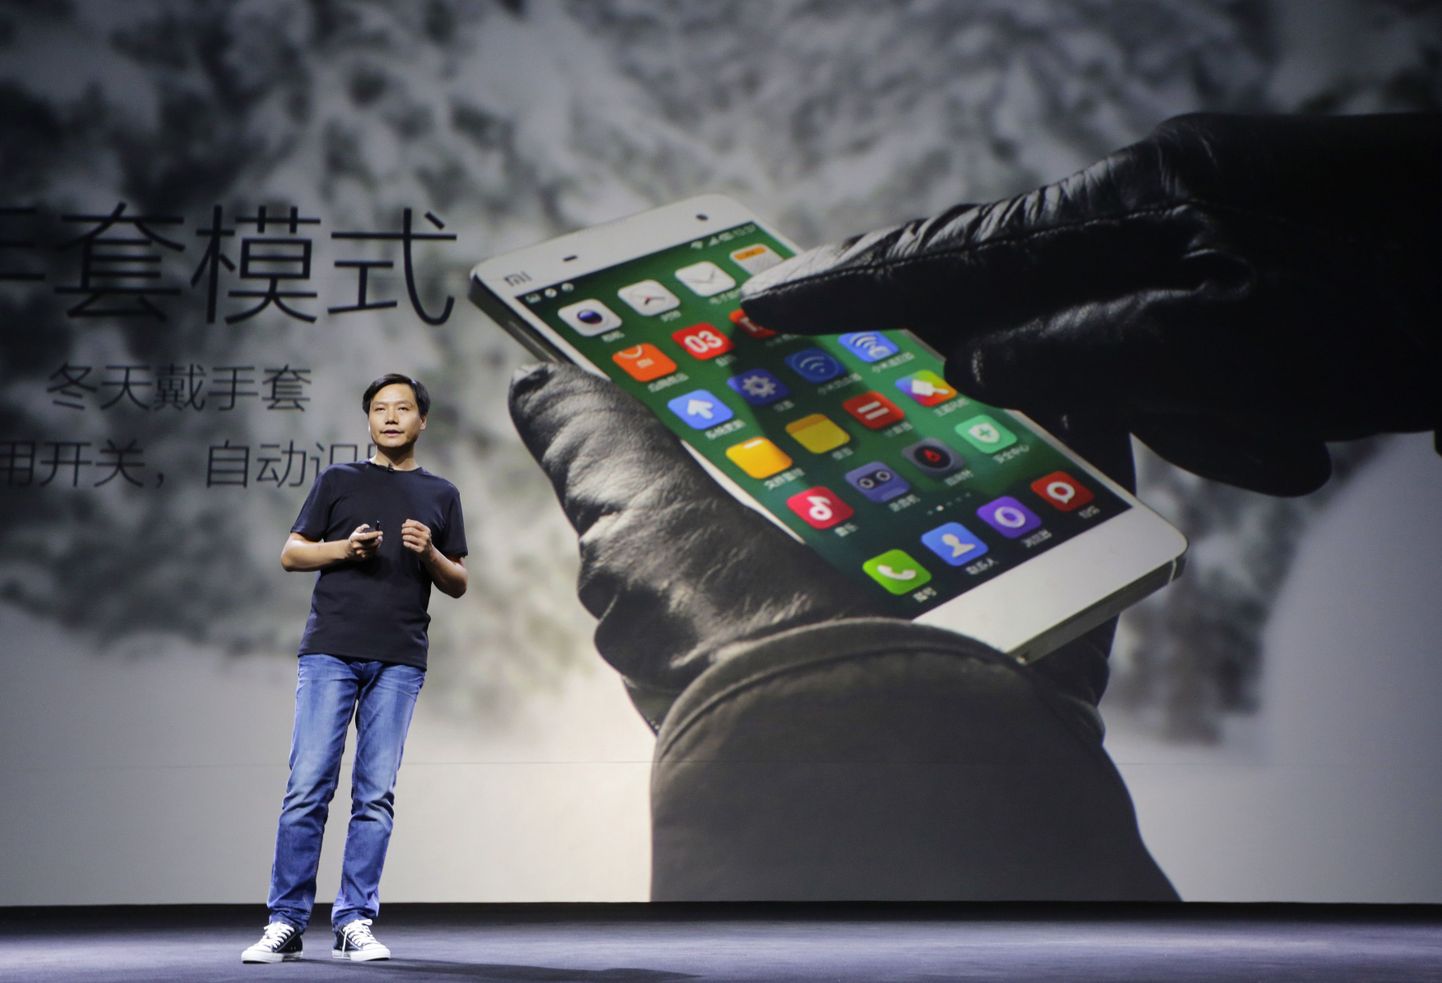 Xiaomi Phone 4. Иллюстративное фото.